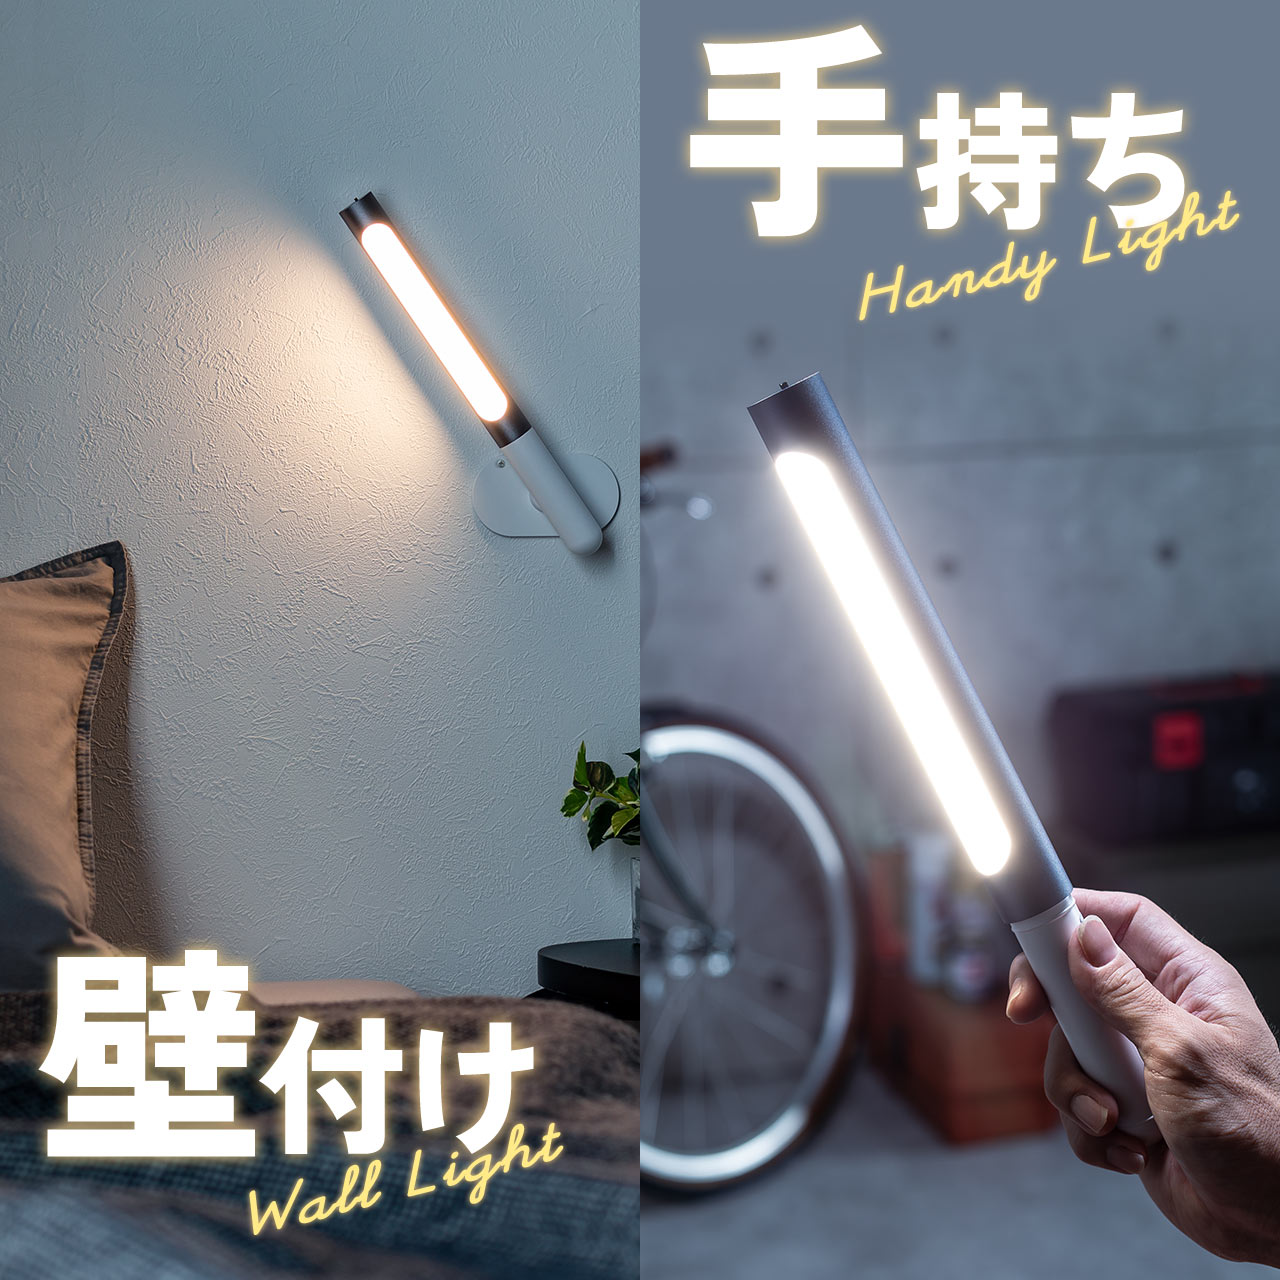 LEDライト 壁面 ウォールライト ハンディライト 充電式 250ルーメン 色温度調整対応 800-LED070DS